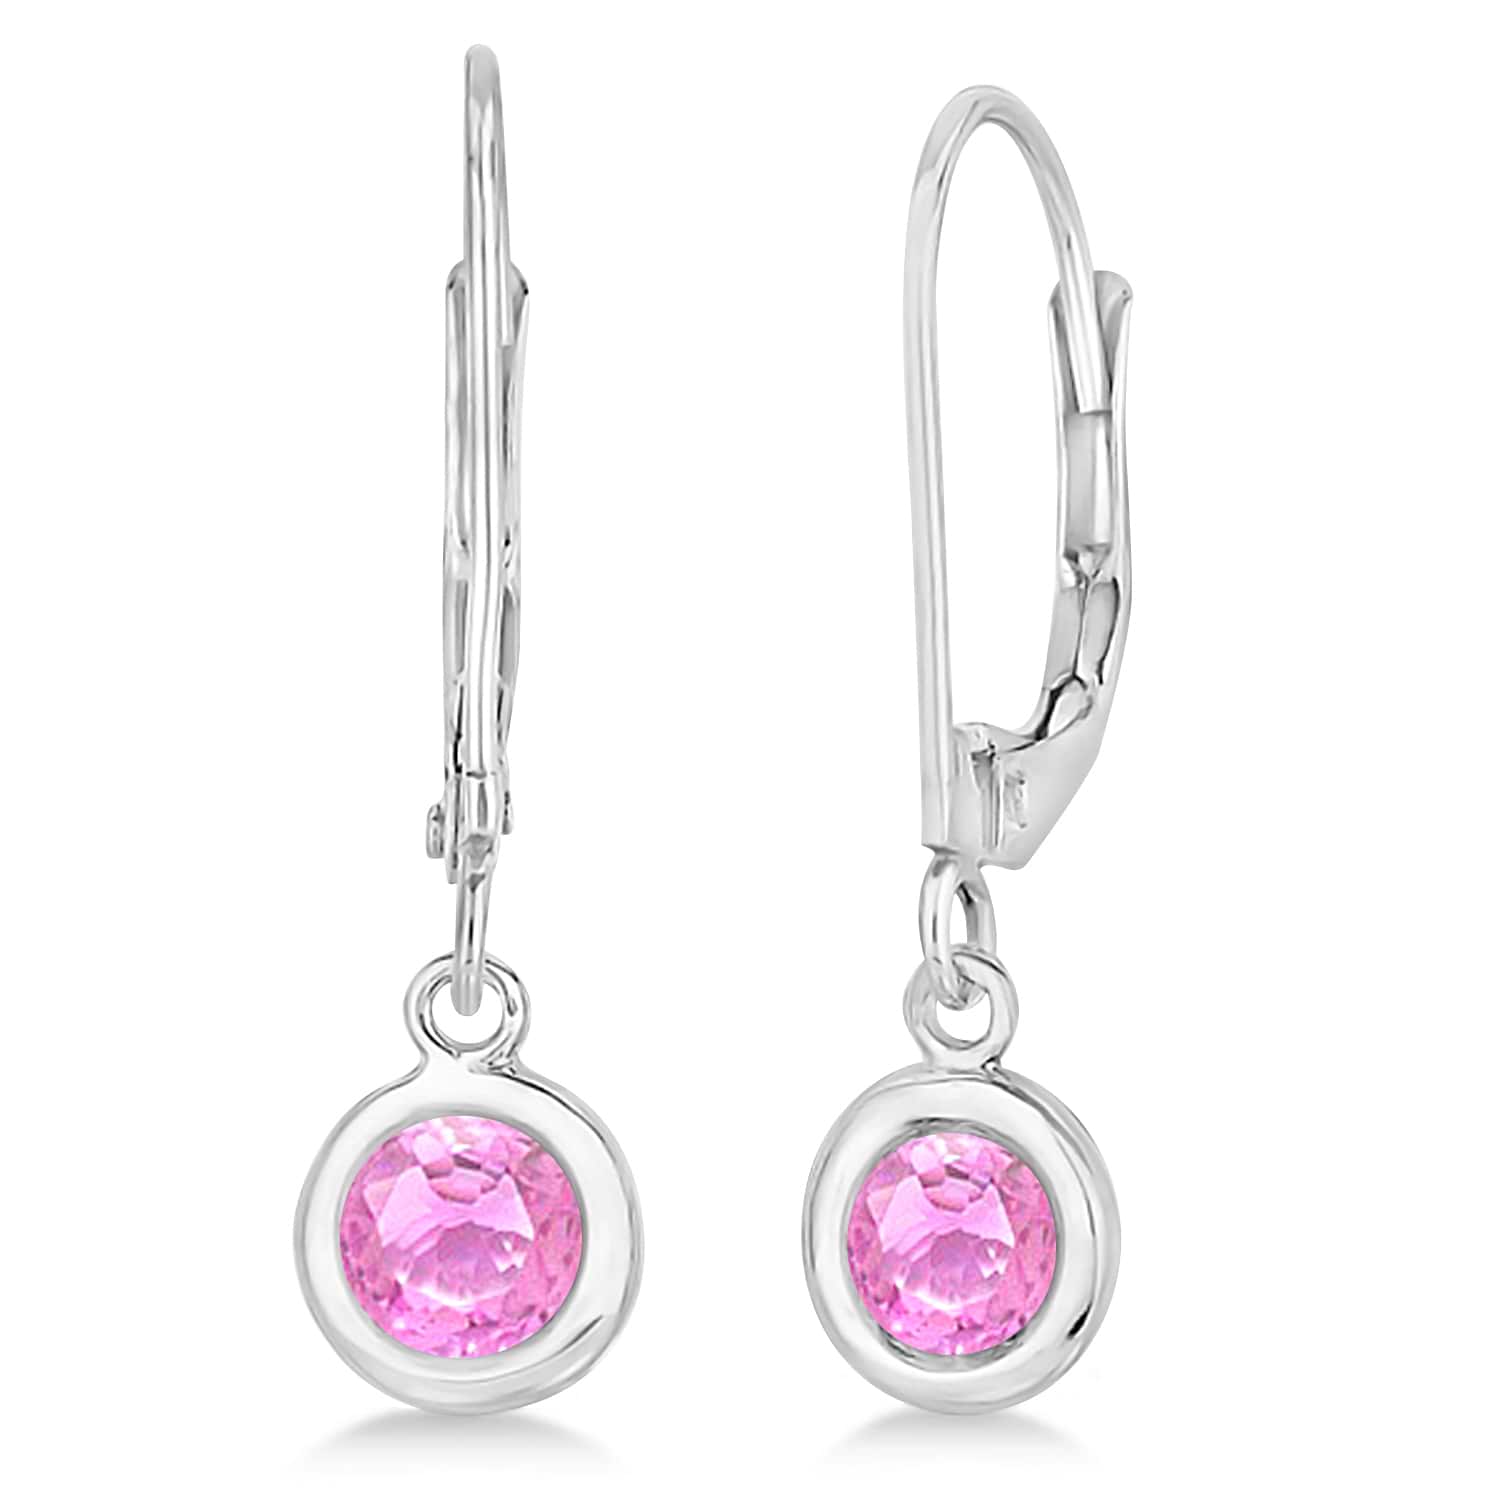 Leverback Dangling Drop Pink Sapphire Earrings 14k White Gold (1.00ct)